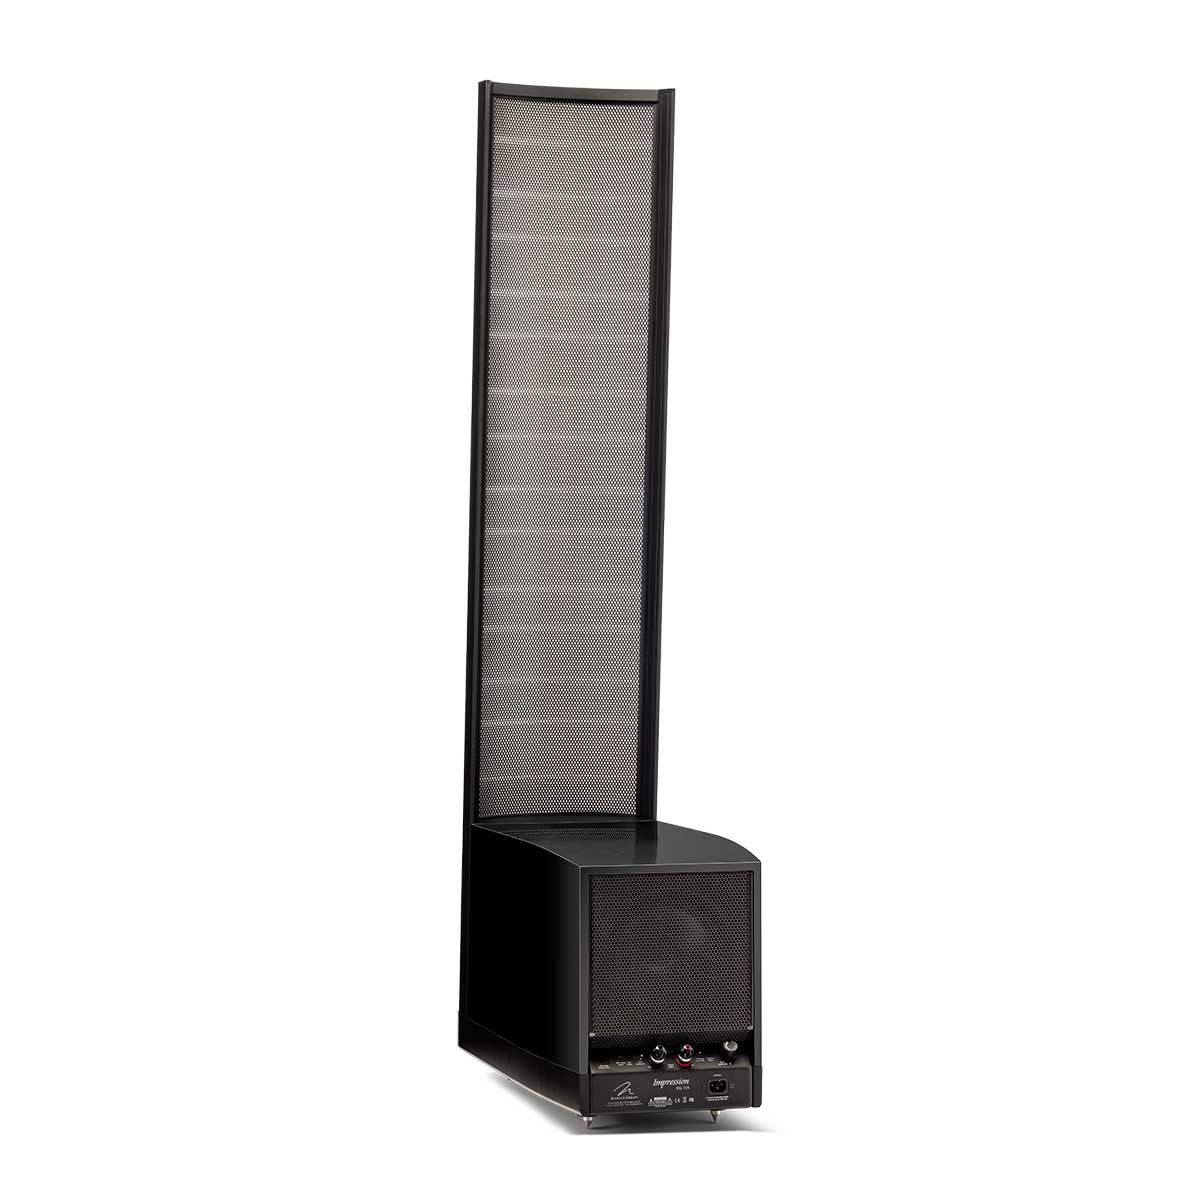 
MartinLogan Impression ESL 11A Floorstanding Speaker
